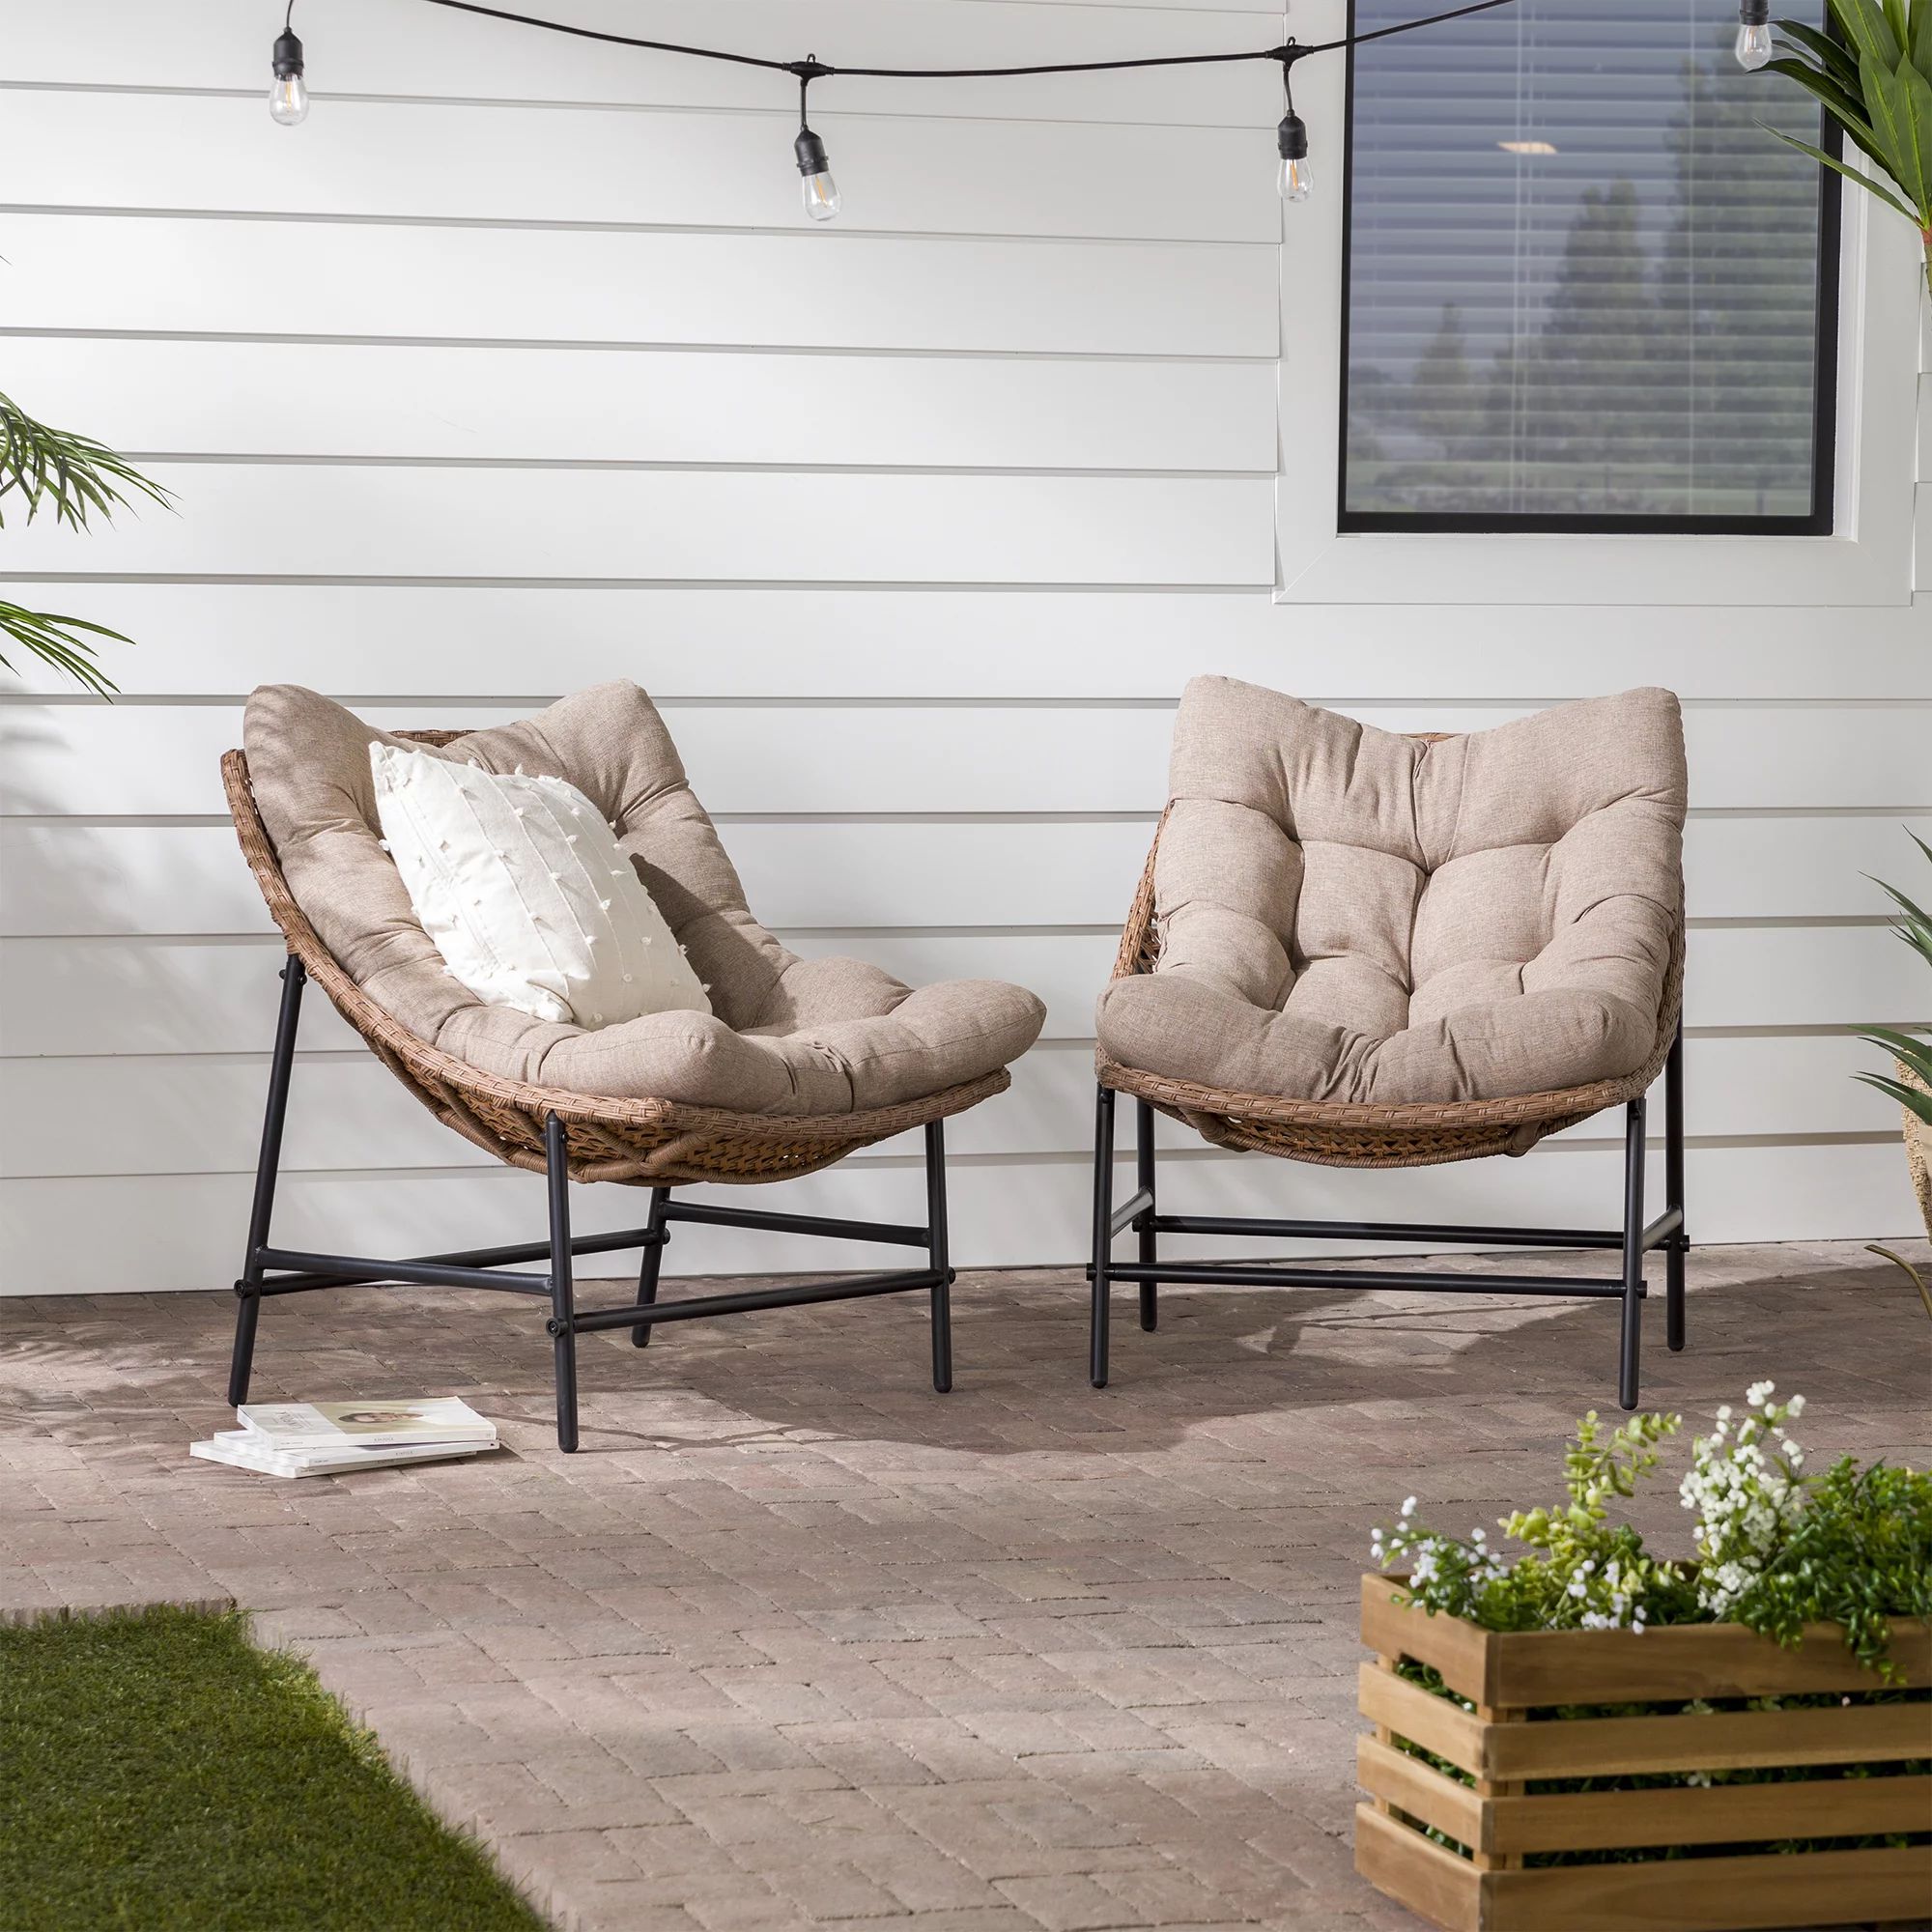 Papasan Scoop Outdoor Patio Chairs, Set of 2 - Natural | Walmart (US)